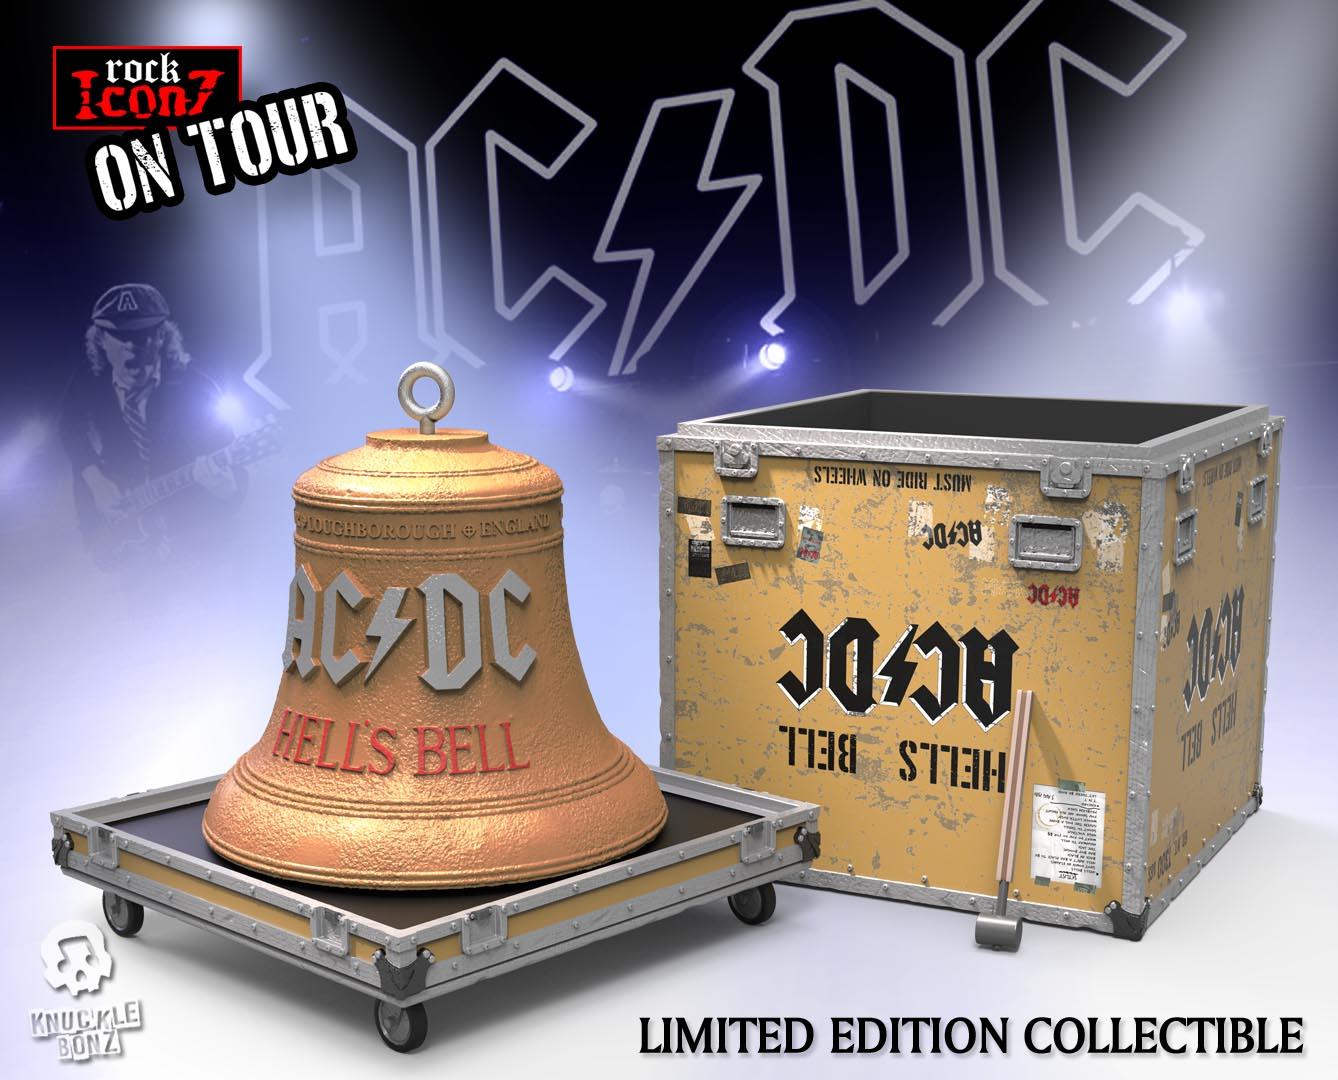 KNUACDCBELL100 AC/DC - Hells Bells On Tour Series Replica - KnuckleBonz - Titan Pop Culture